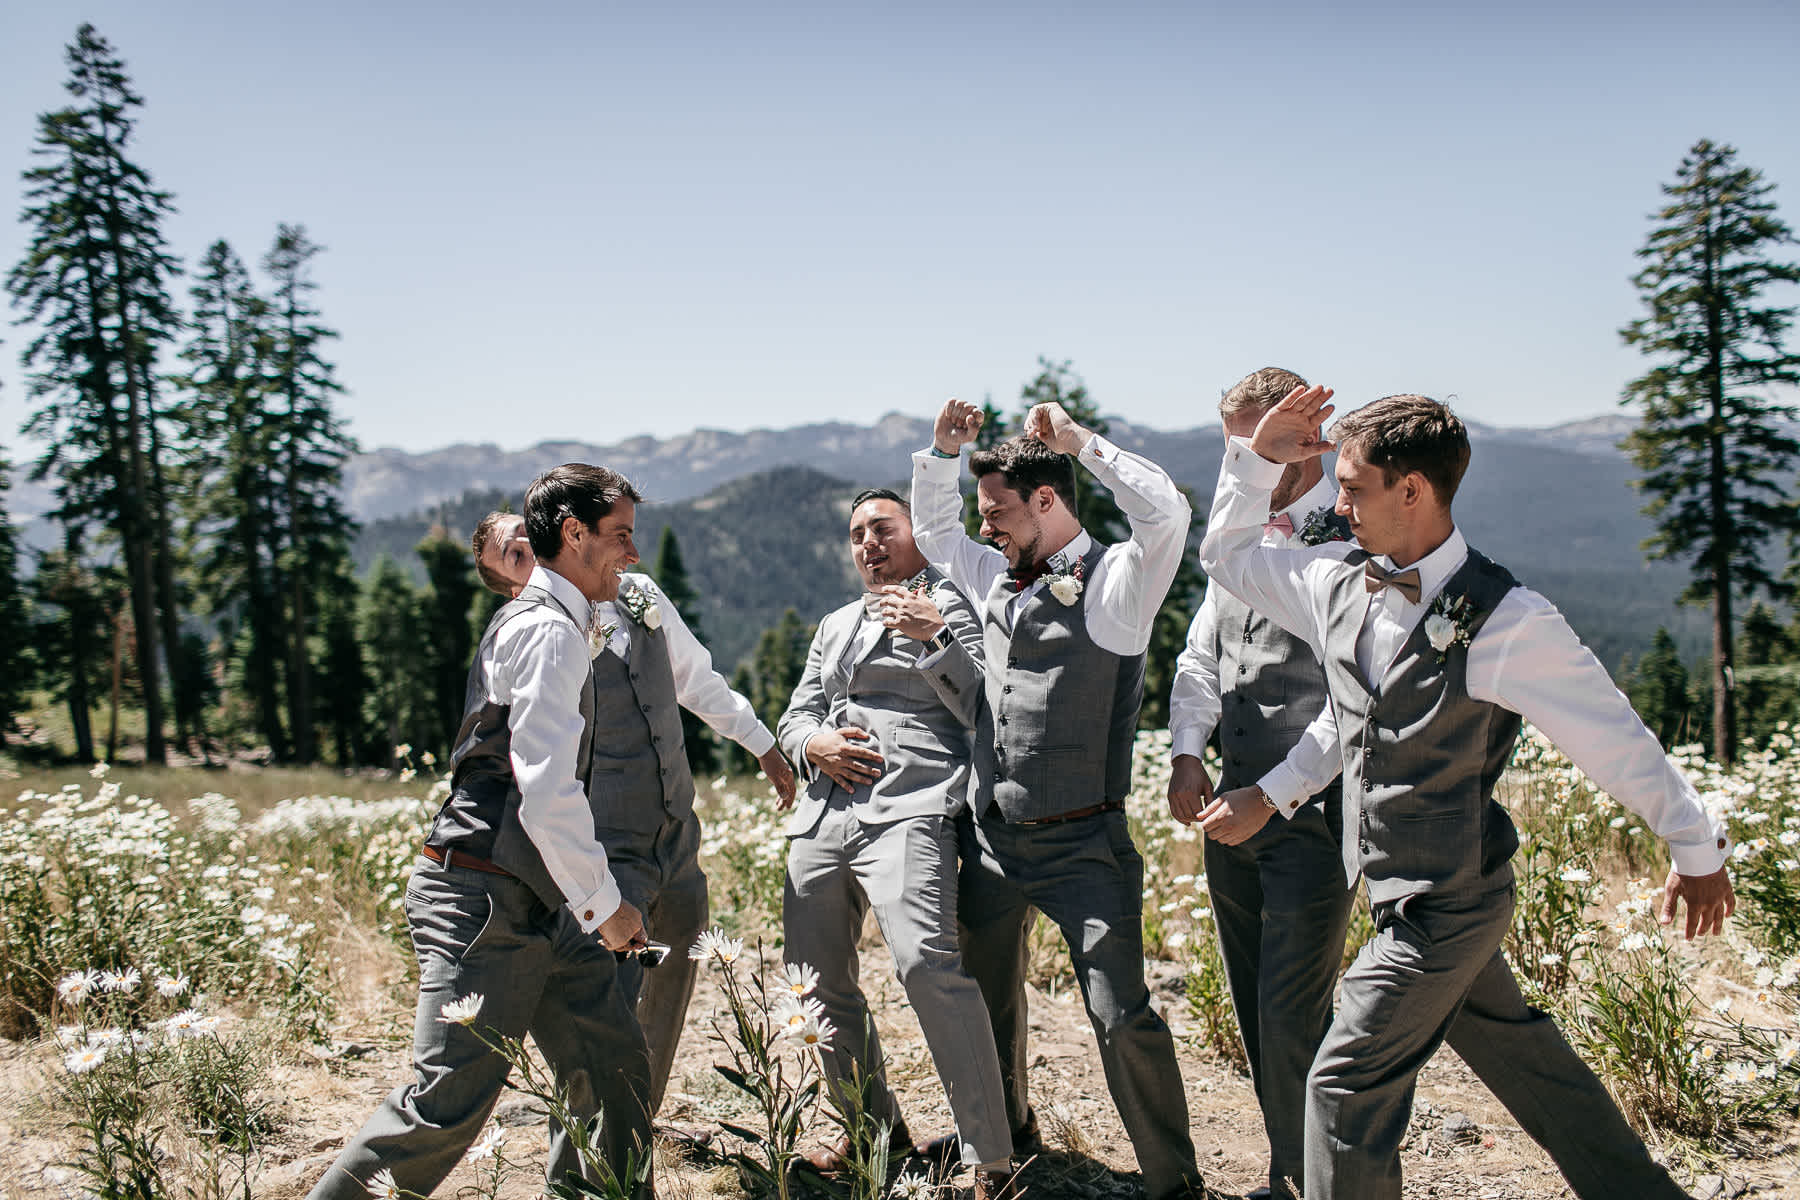 zephyr-lodge-summer-mountain-top-wedding-54